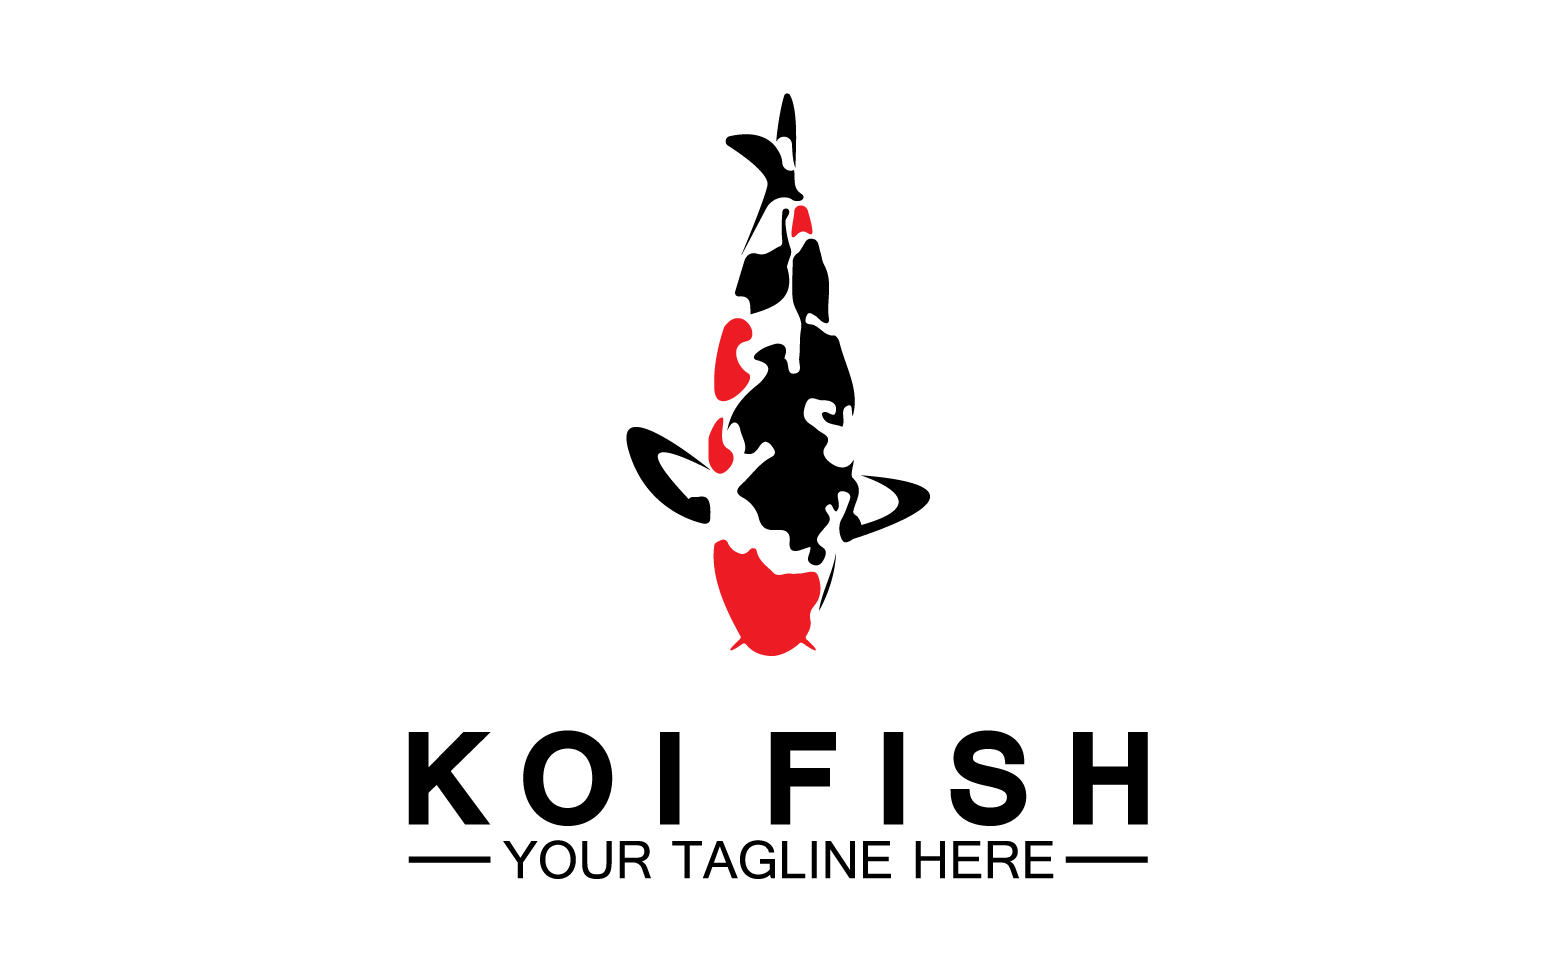 Fish koi black and red icon logo vector v5